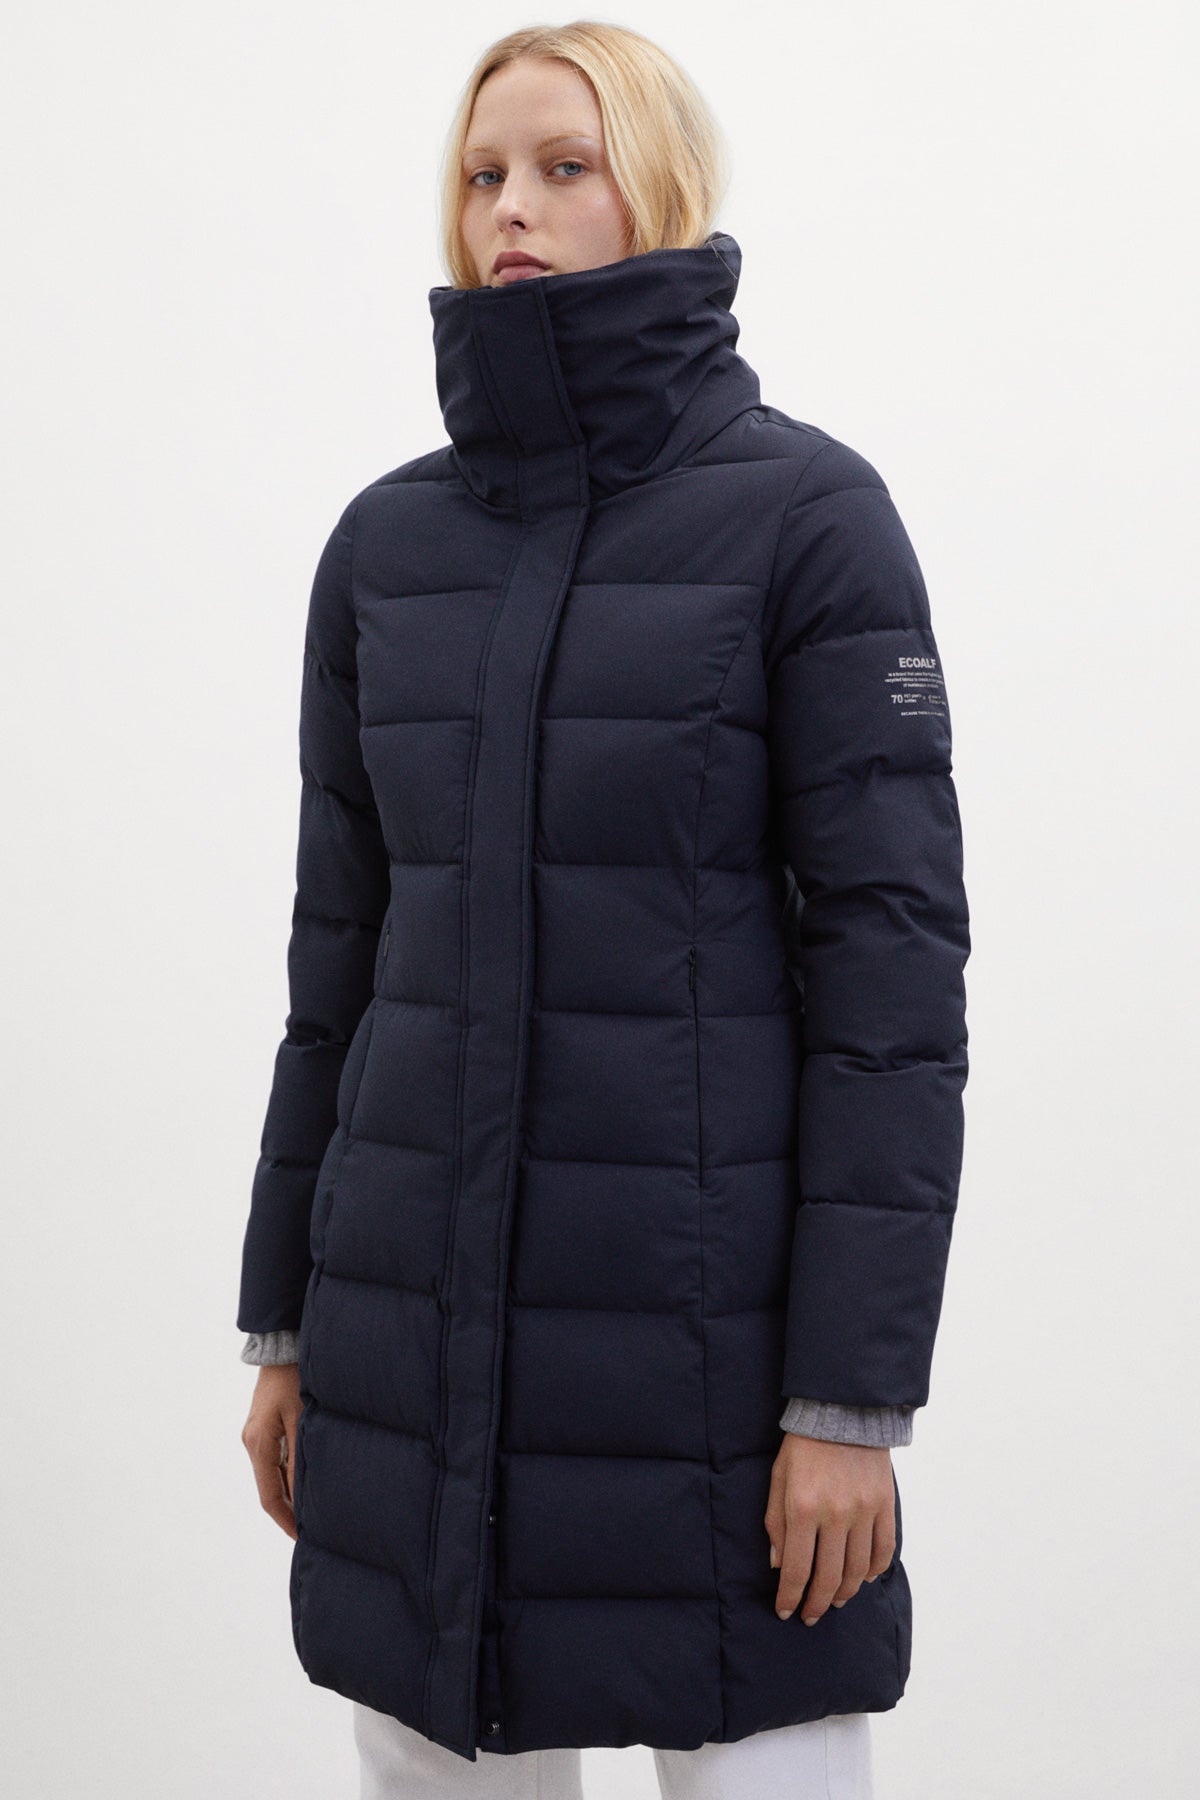 Ecoalf Manliealf Jacket - Abrigo Mujer